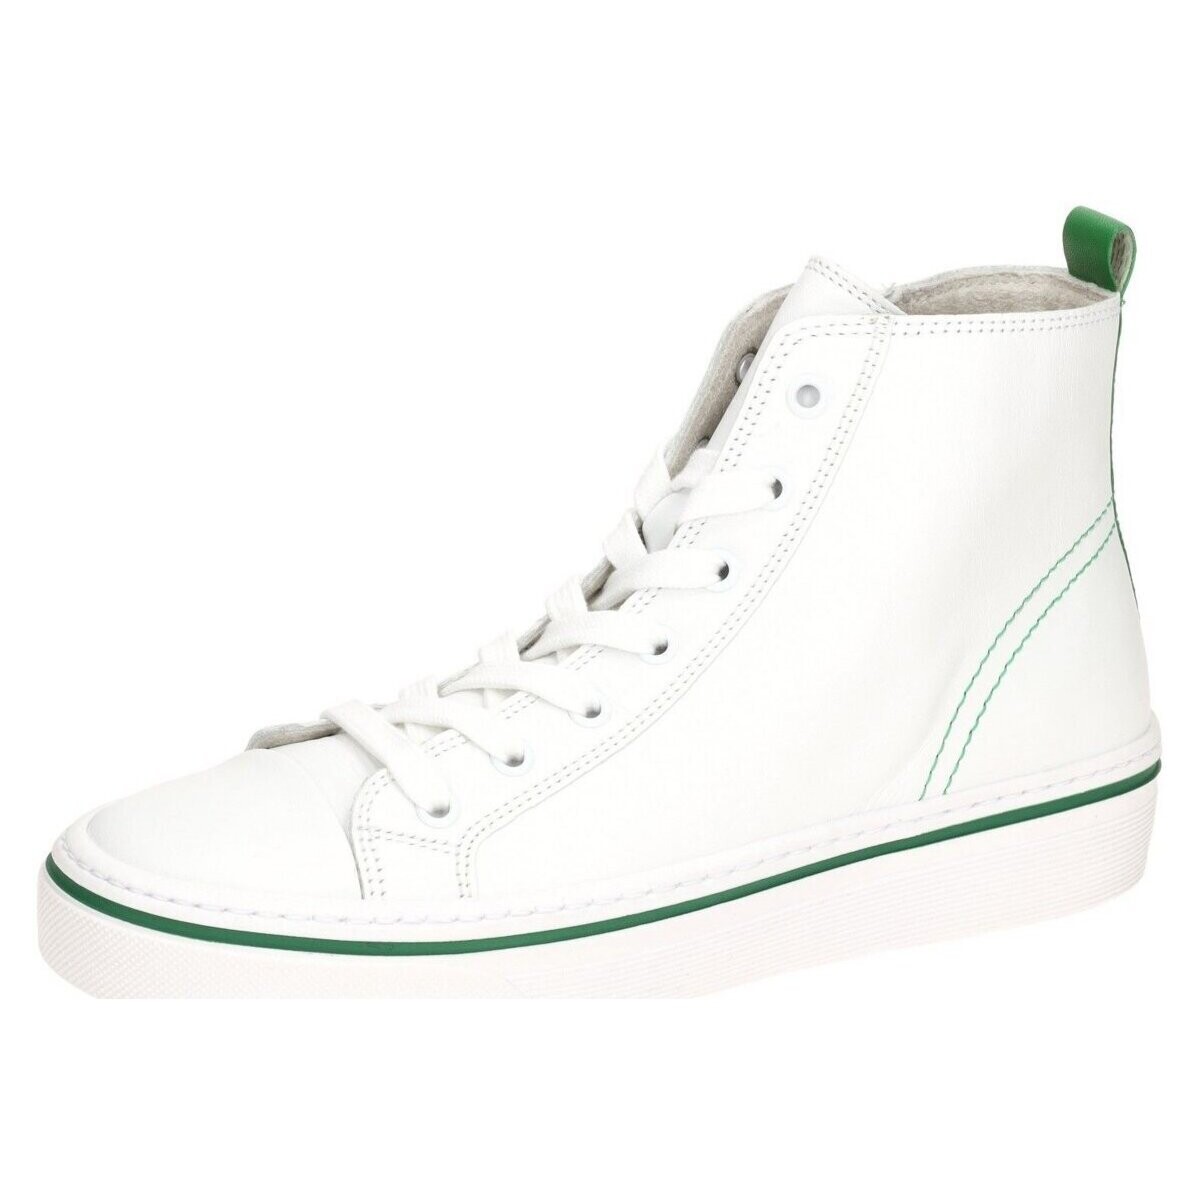 Schuhe Damen Sneaker Gabor Mid s Stiefelette grün Nappa 43.160.29 43.160.29 Weiss